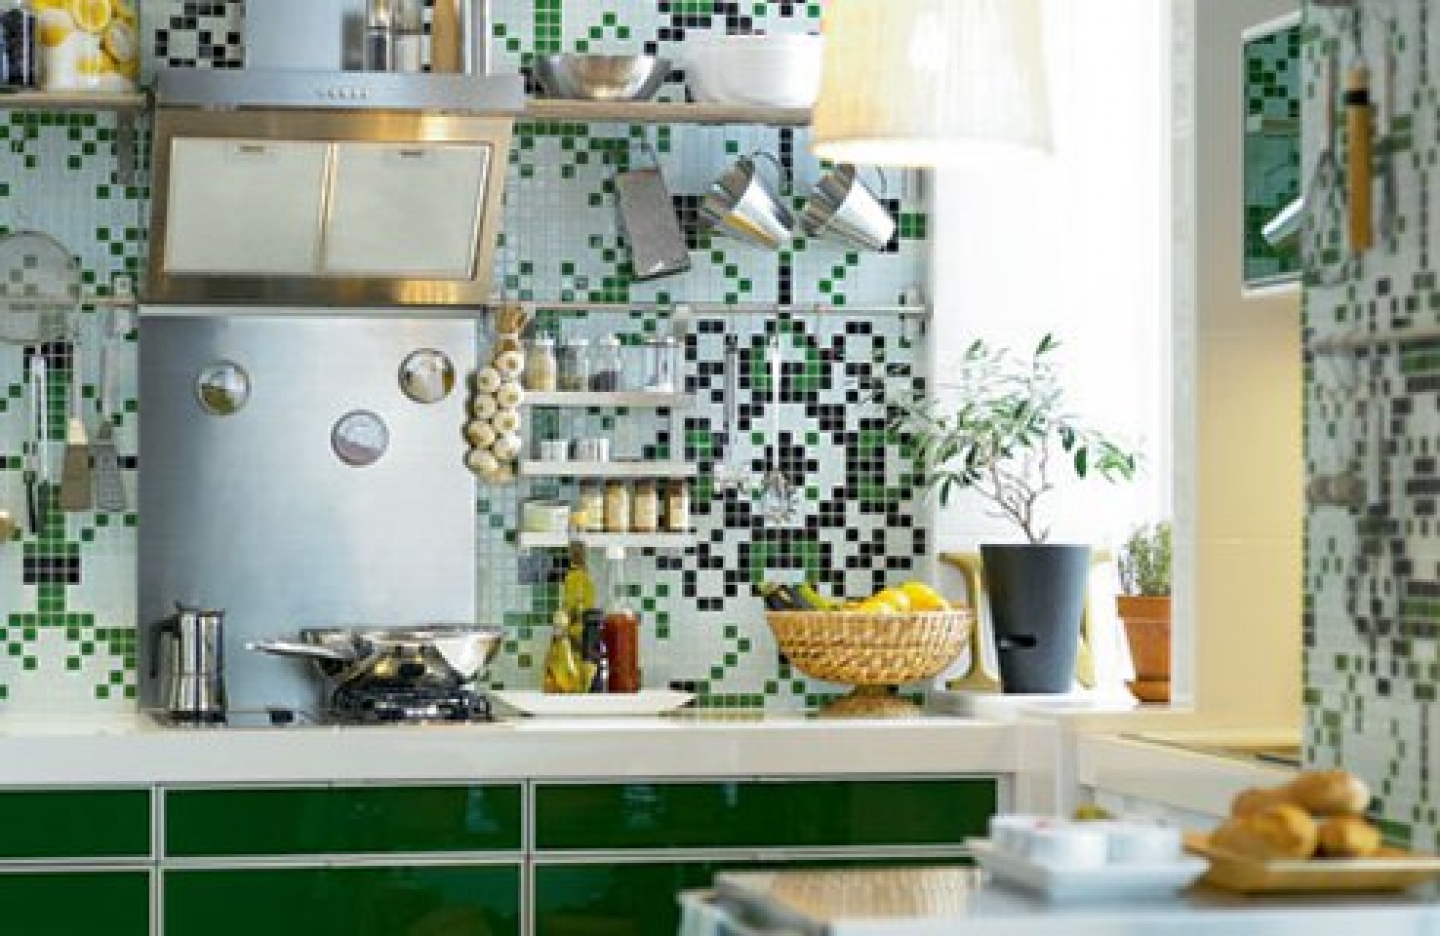 Ikea Kitchen Wallpaper Designs Modern Home Decor And Furniture The